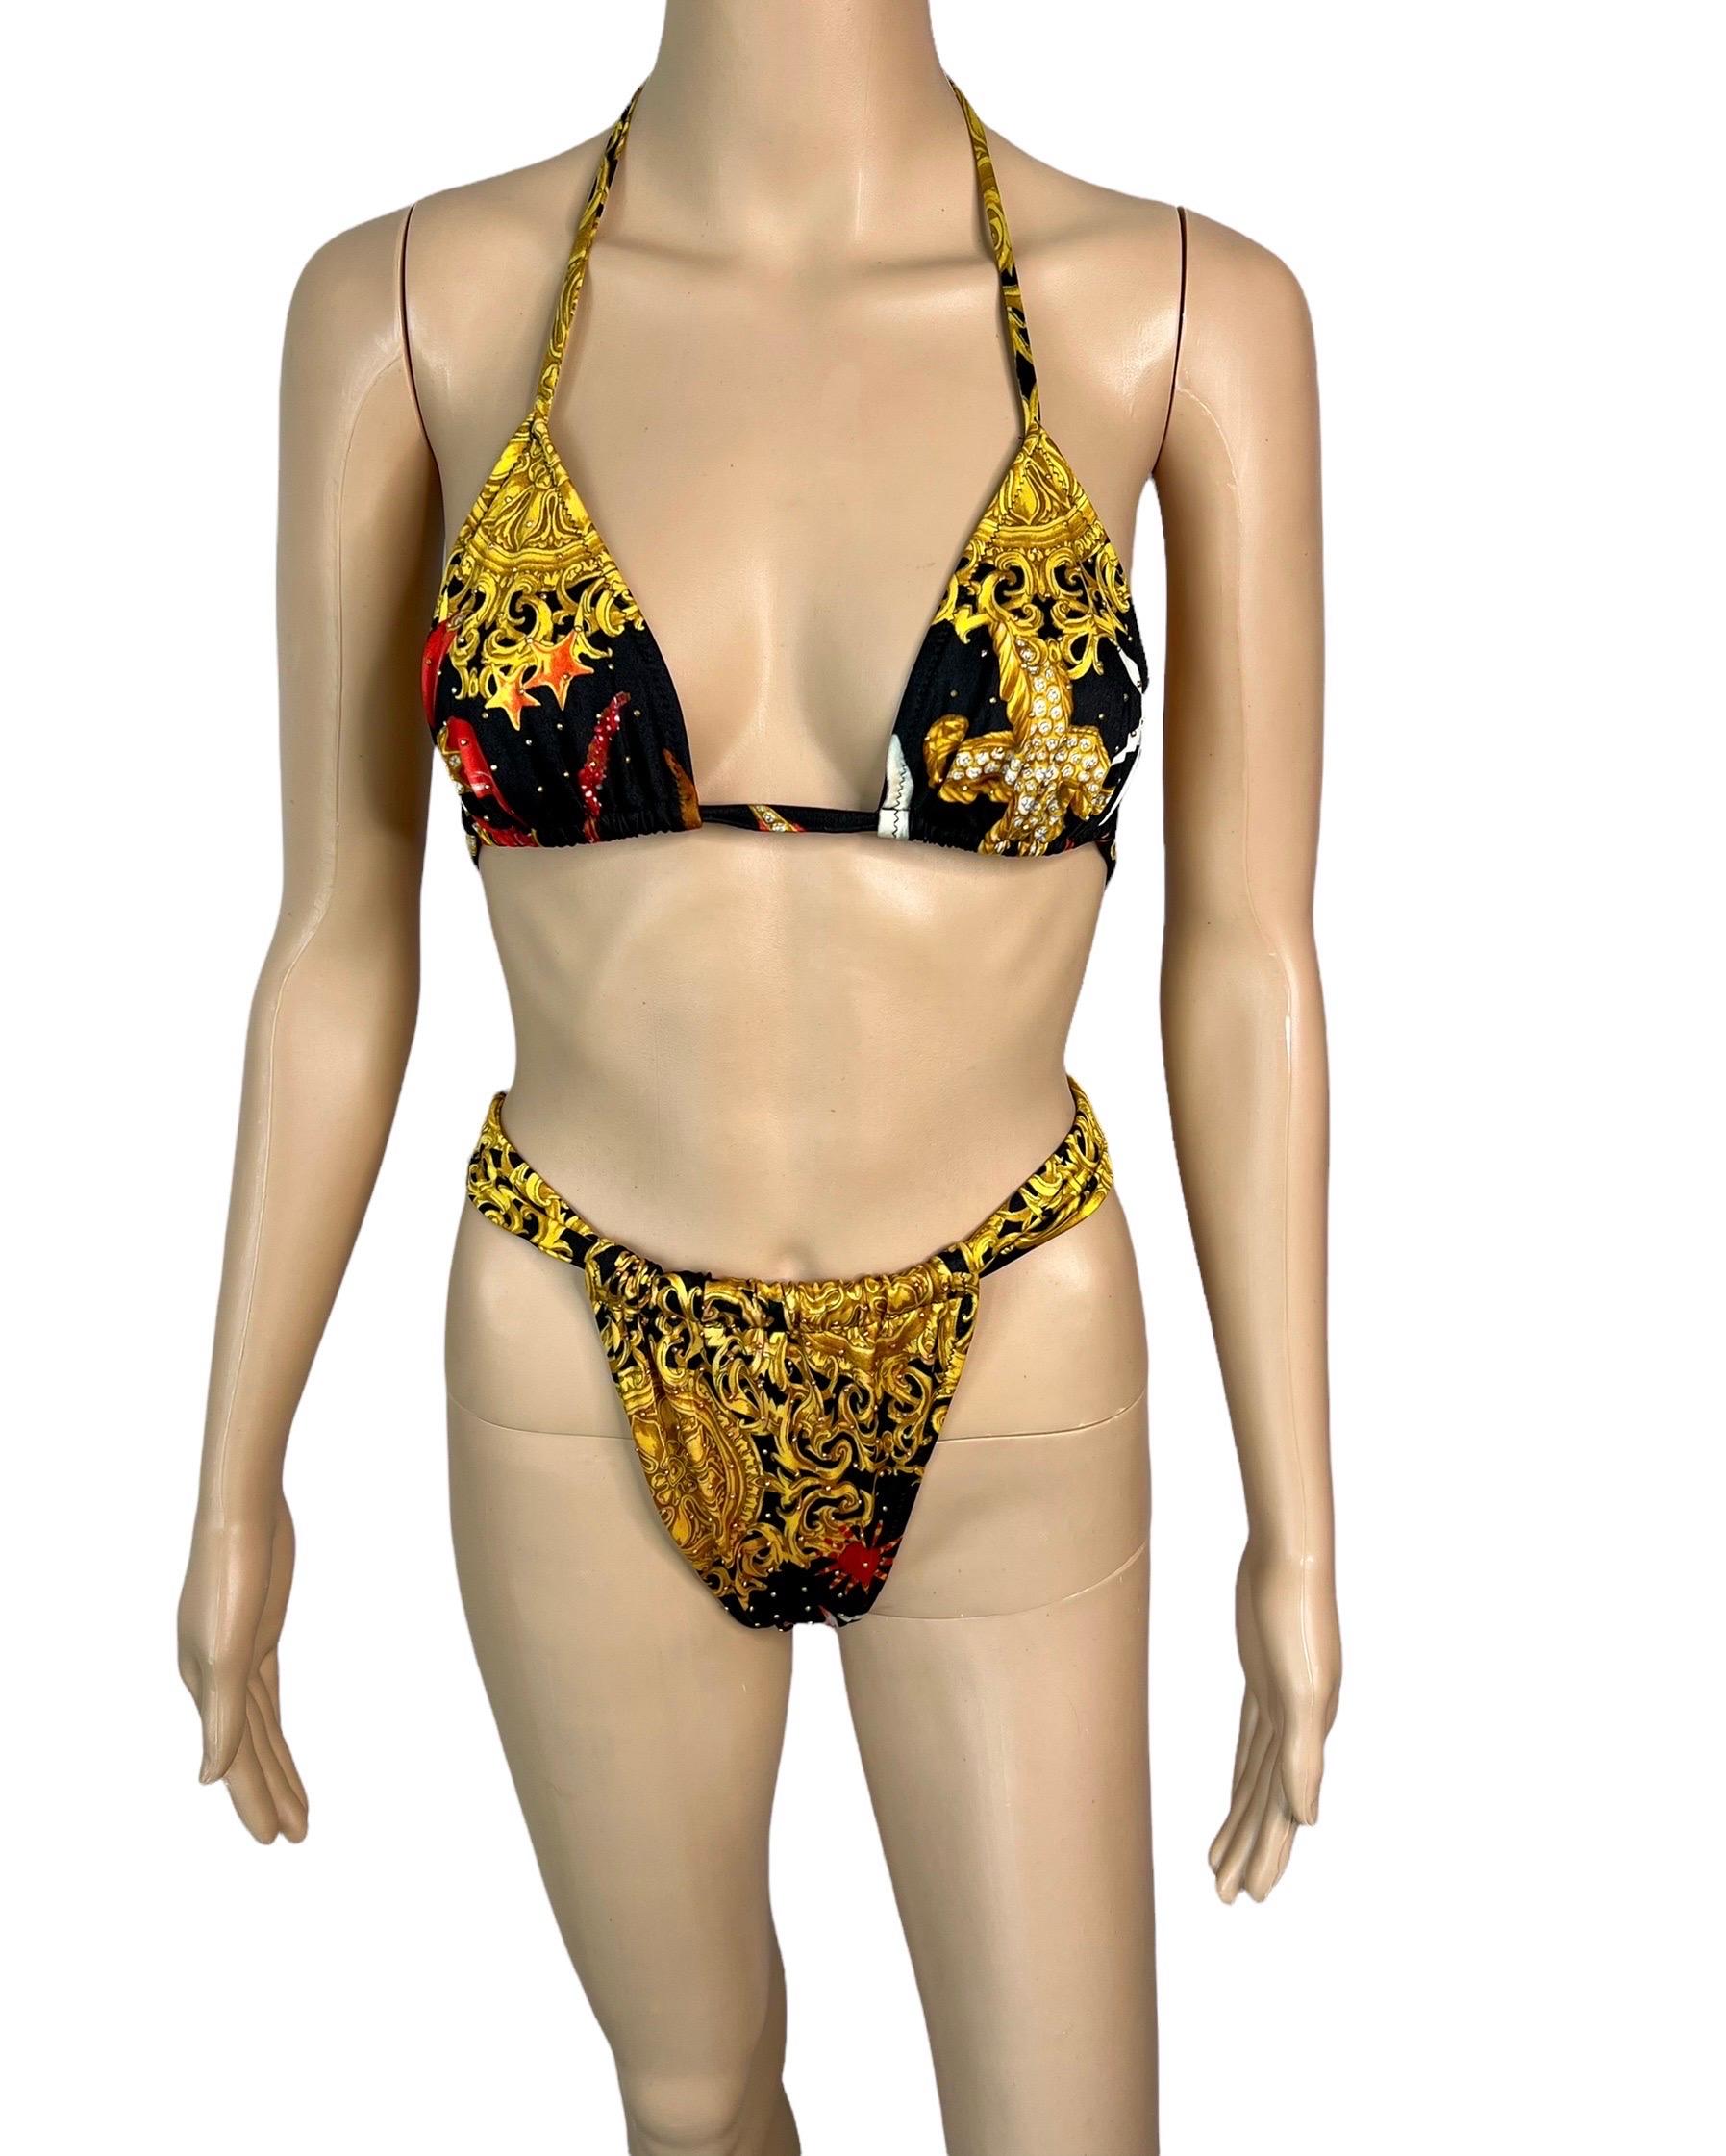 Gianni Versace S/S 1992 Baroque Embellished Two-Piece Bikini Swimsuit Swimwear For Sale 1